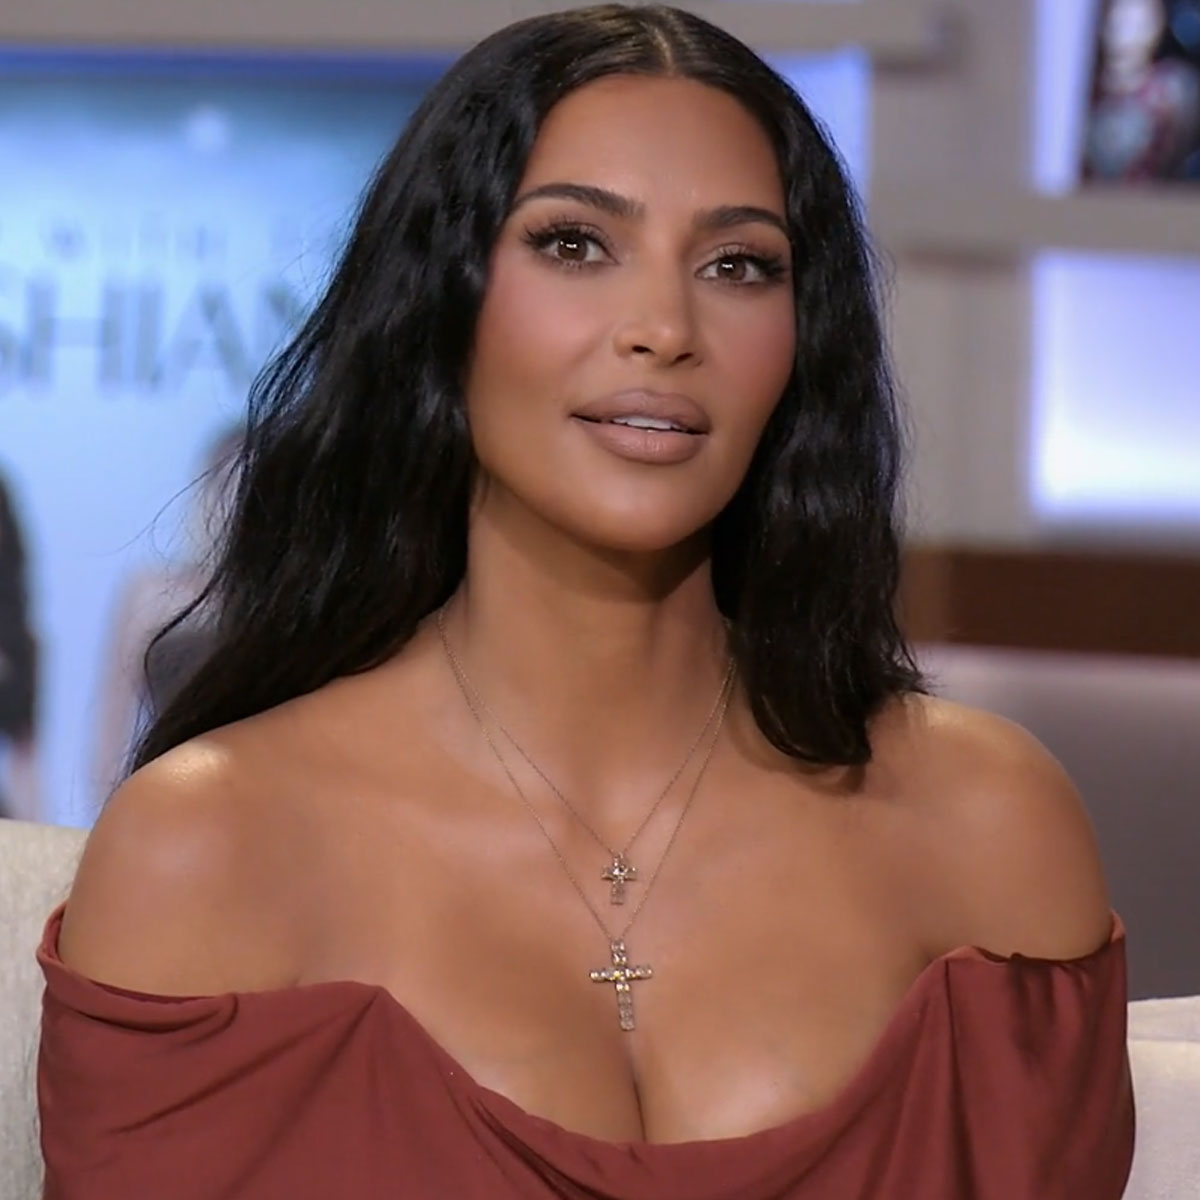 New Tape Kim Kardashian Having Sex - Kim Kardashian Admits Infamous Sex Tape Helped Success of KUWTK